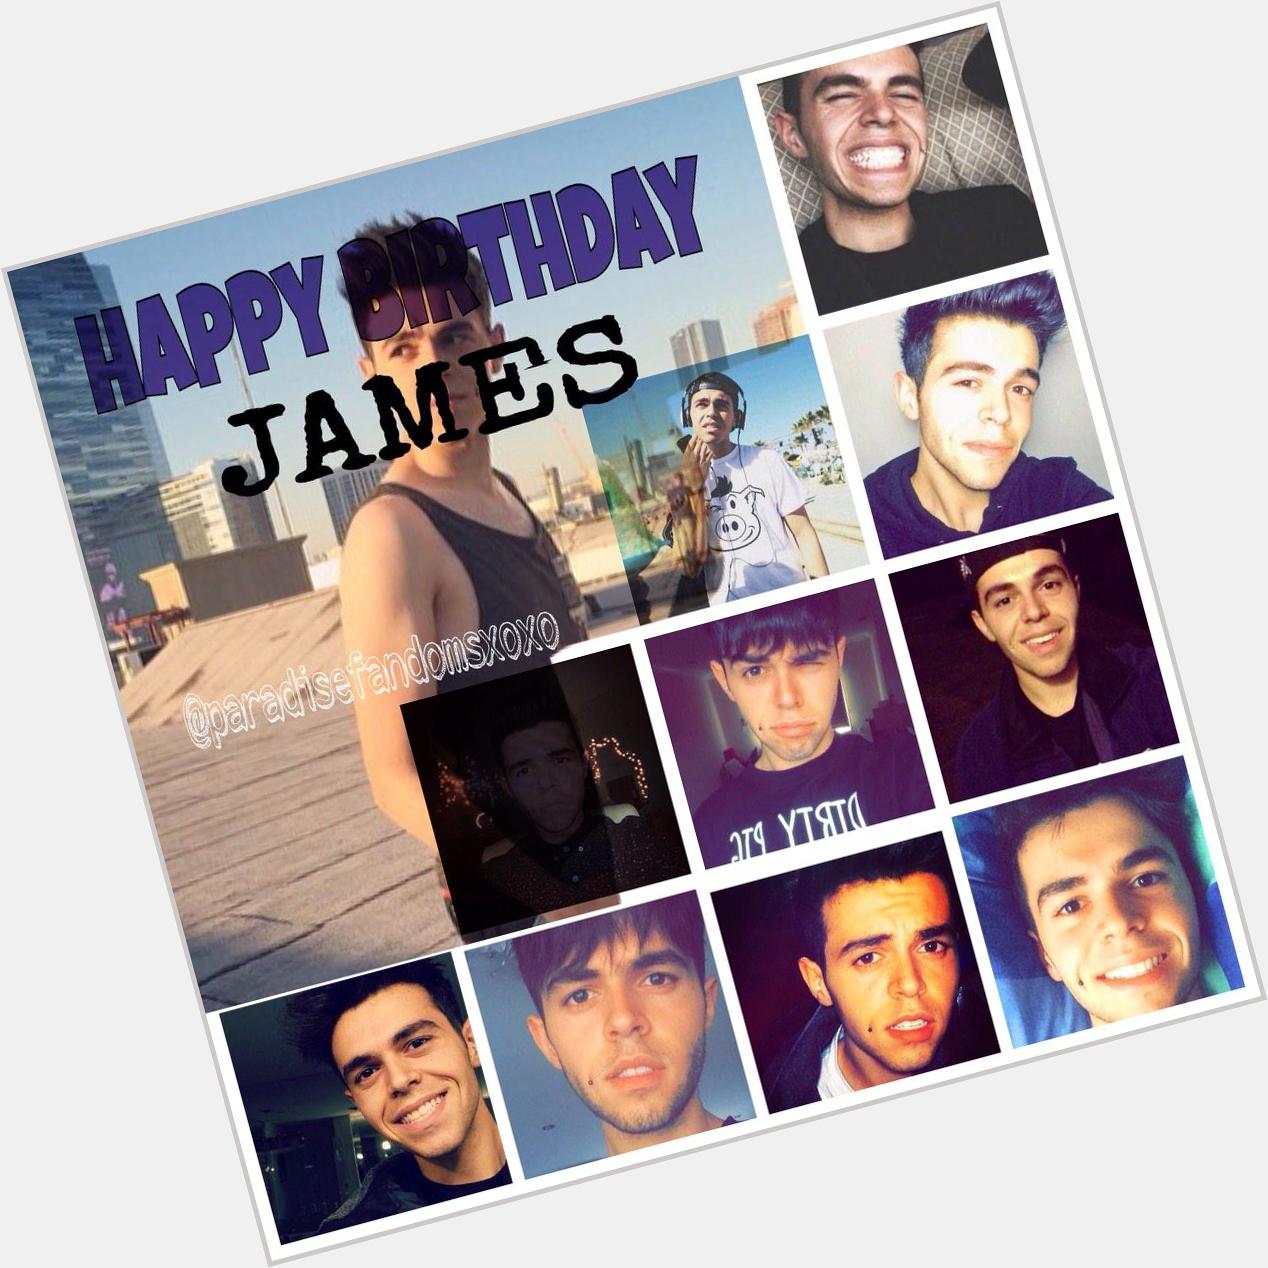 Happy Birthday James   edit from my fan account 